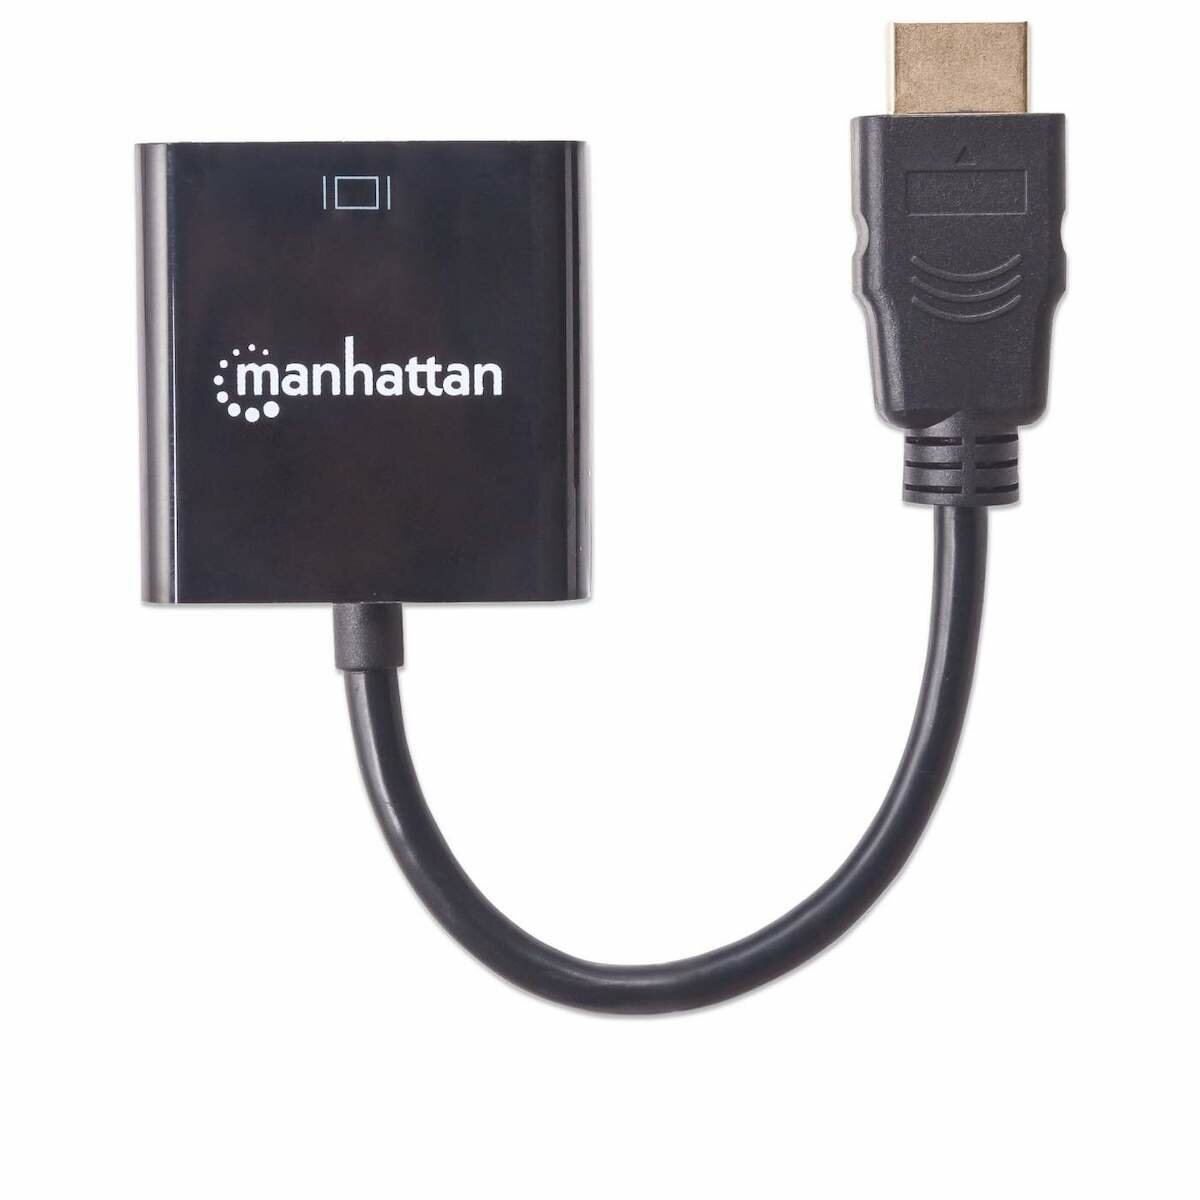 Konwerter Manhattan 151467 HDMI-VGA z góry